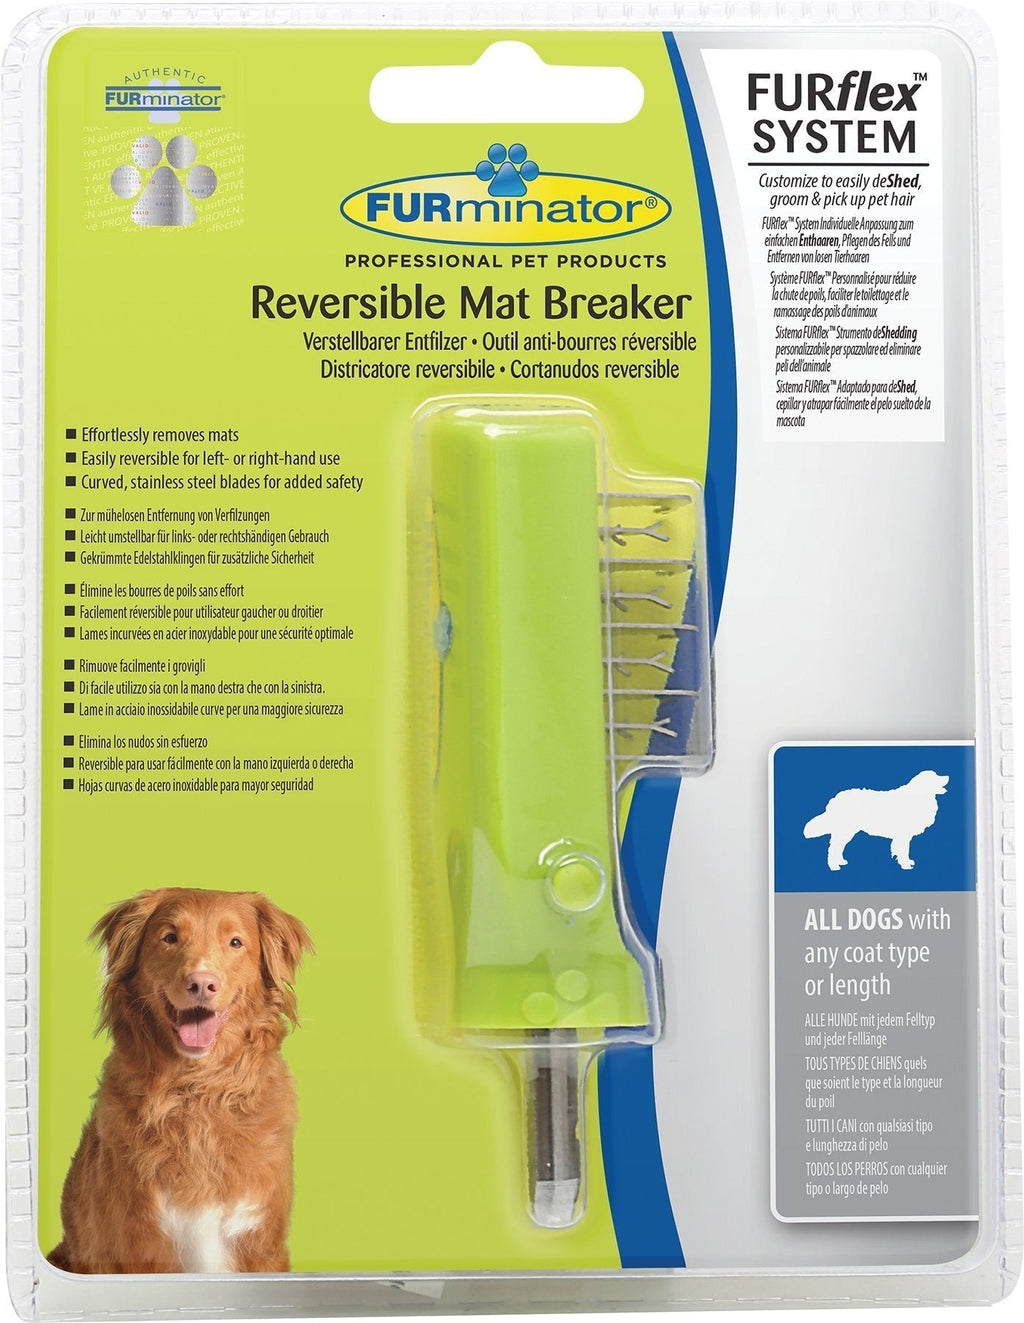 FURminator FURflex Reversible with Any Coat Dematting Comb Breaker for Dogs - PawsPlanet Australia